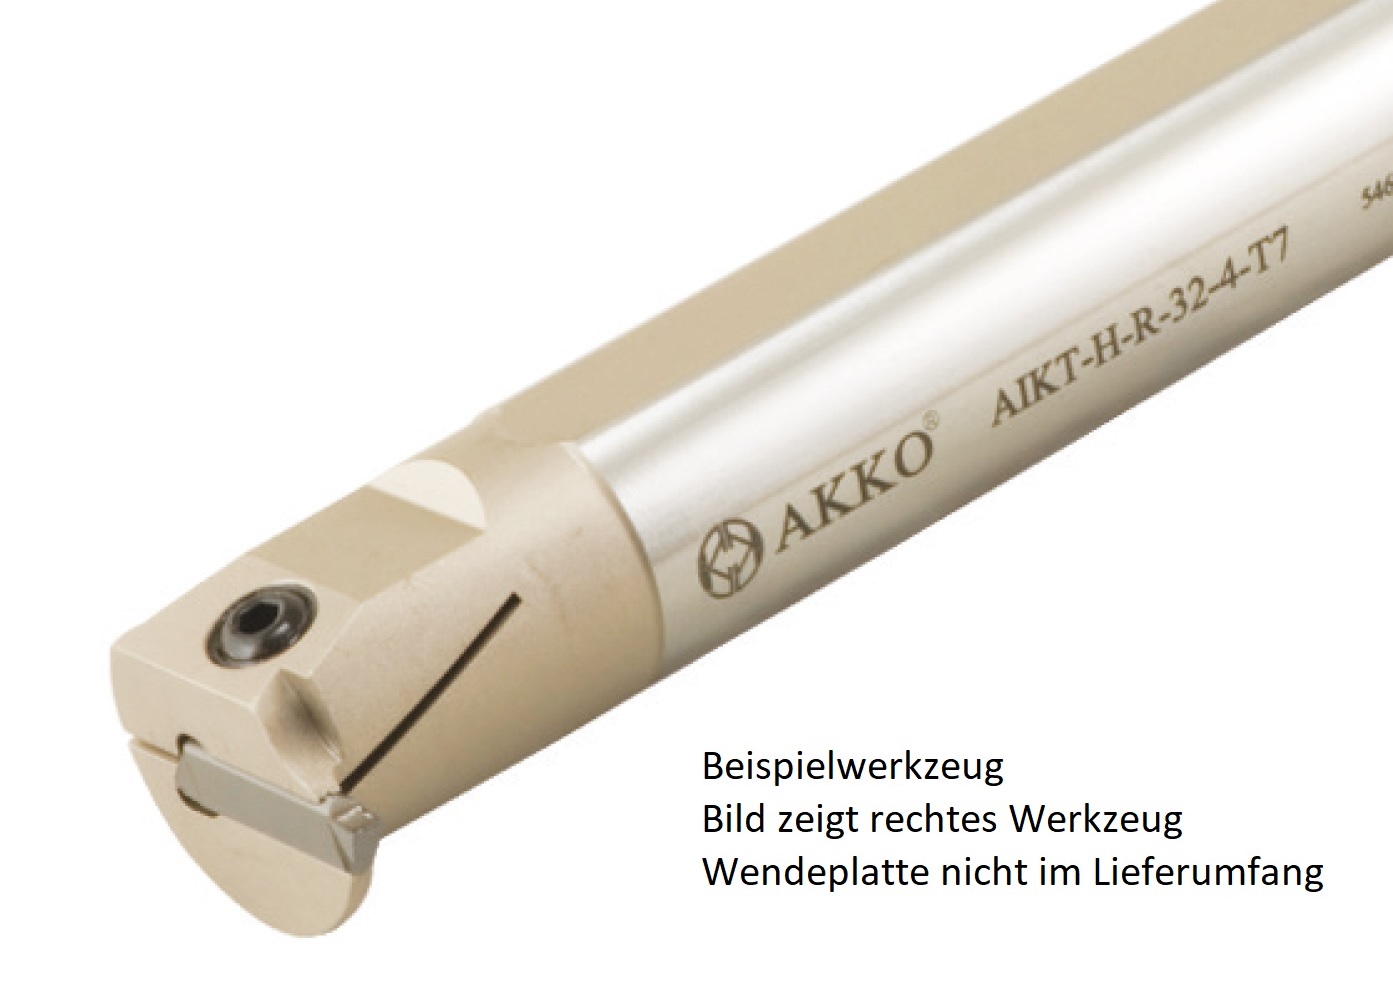 AKKO-Innen-Stechhalter, kompatibel mit Horn-Stechplatte S229-5
Schaft-ø 32, ohne Innenkühlung, rechts